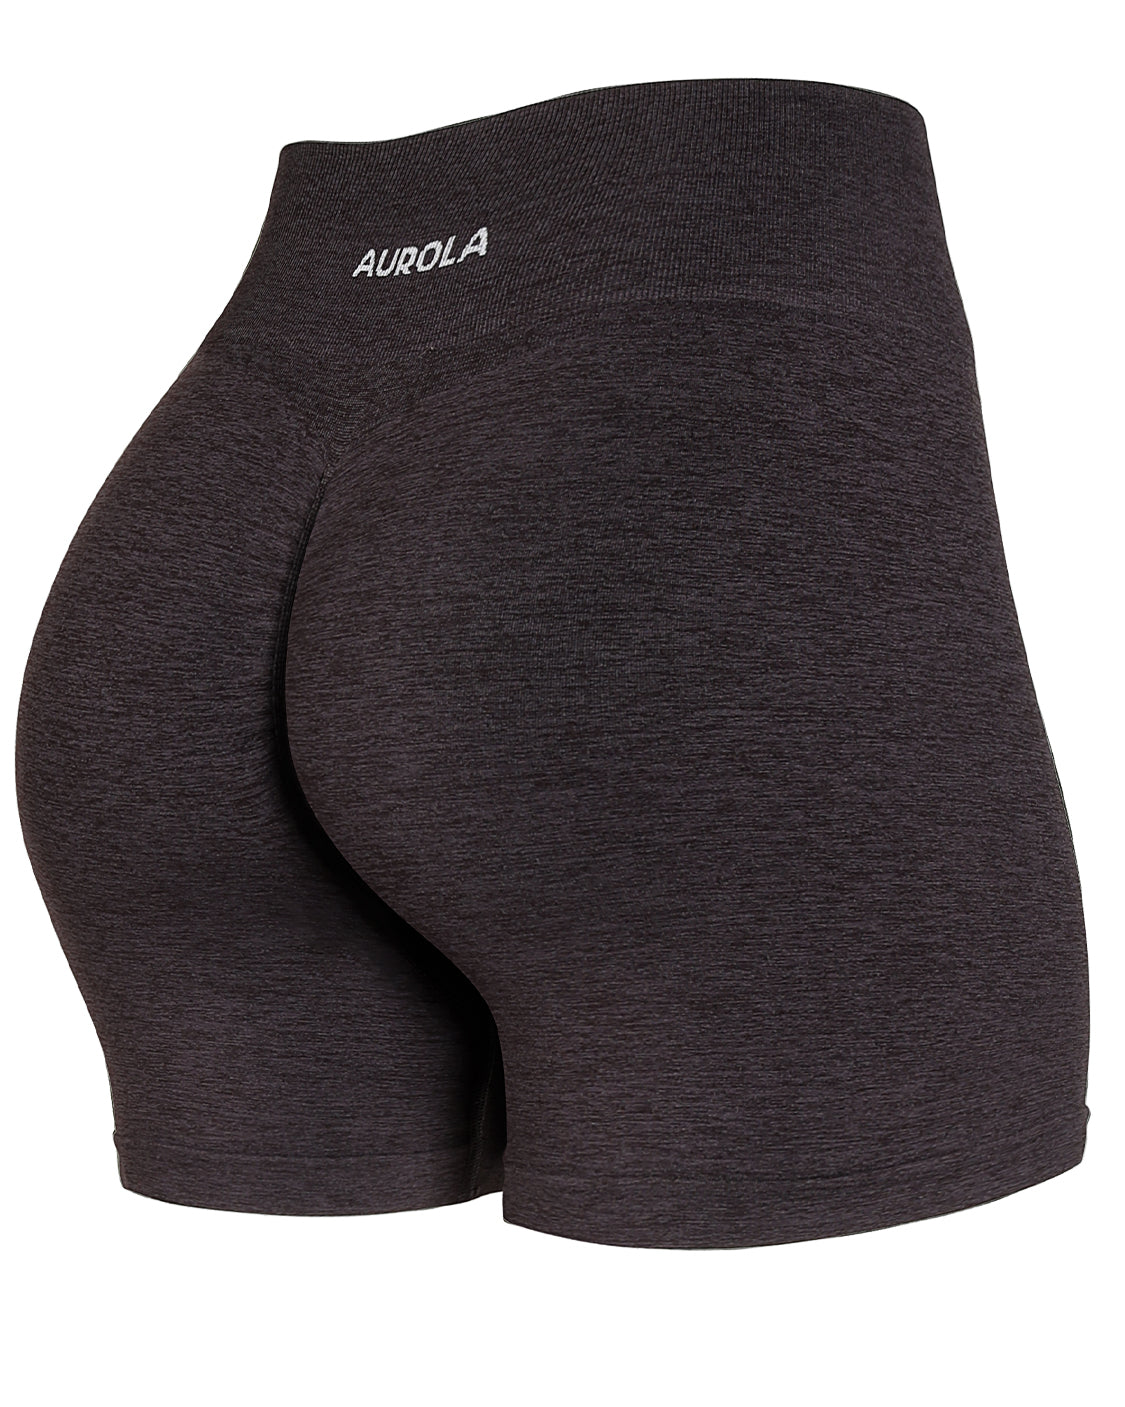 Aurola shorts Purple Size M - $11 (63% Off Retail) - From Emeri